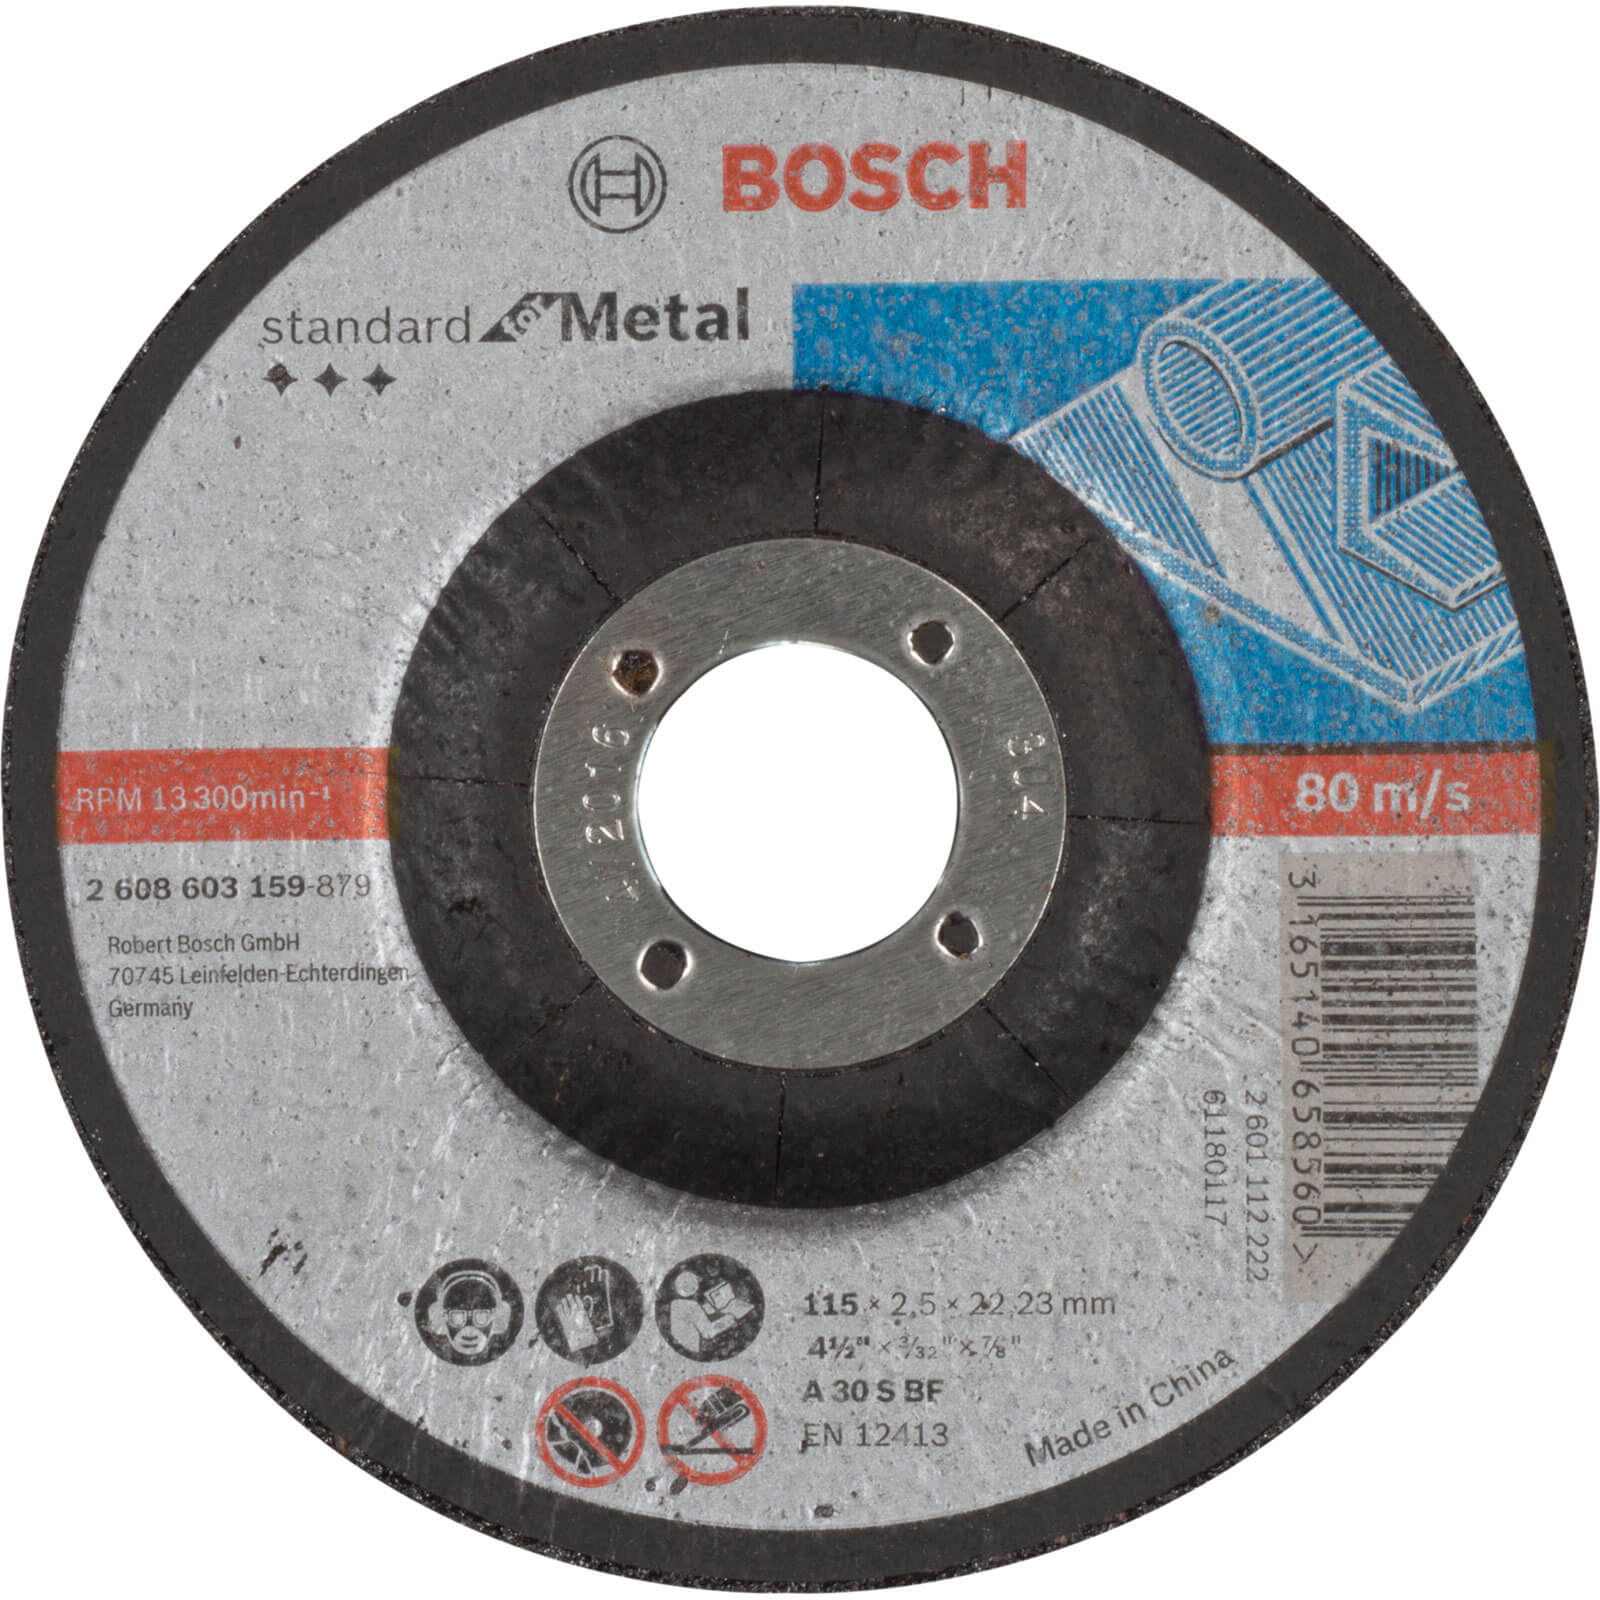 Bosch Standard Depressed Centre Metal Cutting Disc 115mm 2.5mm 22mm